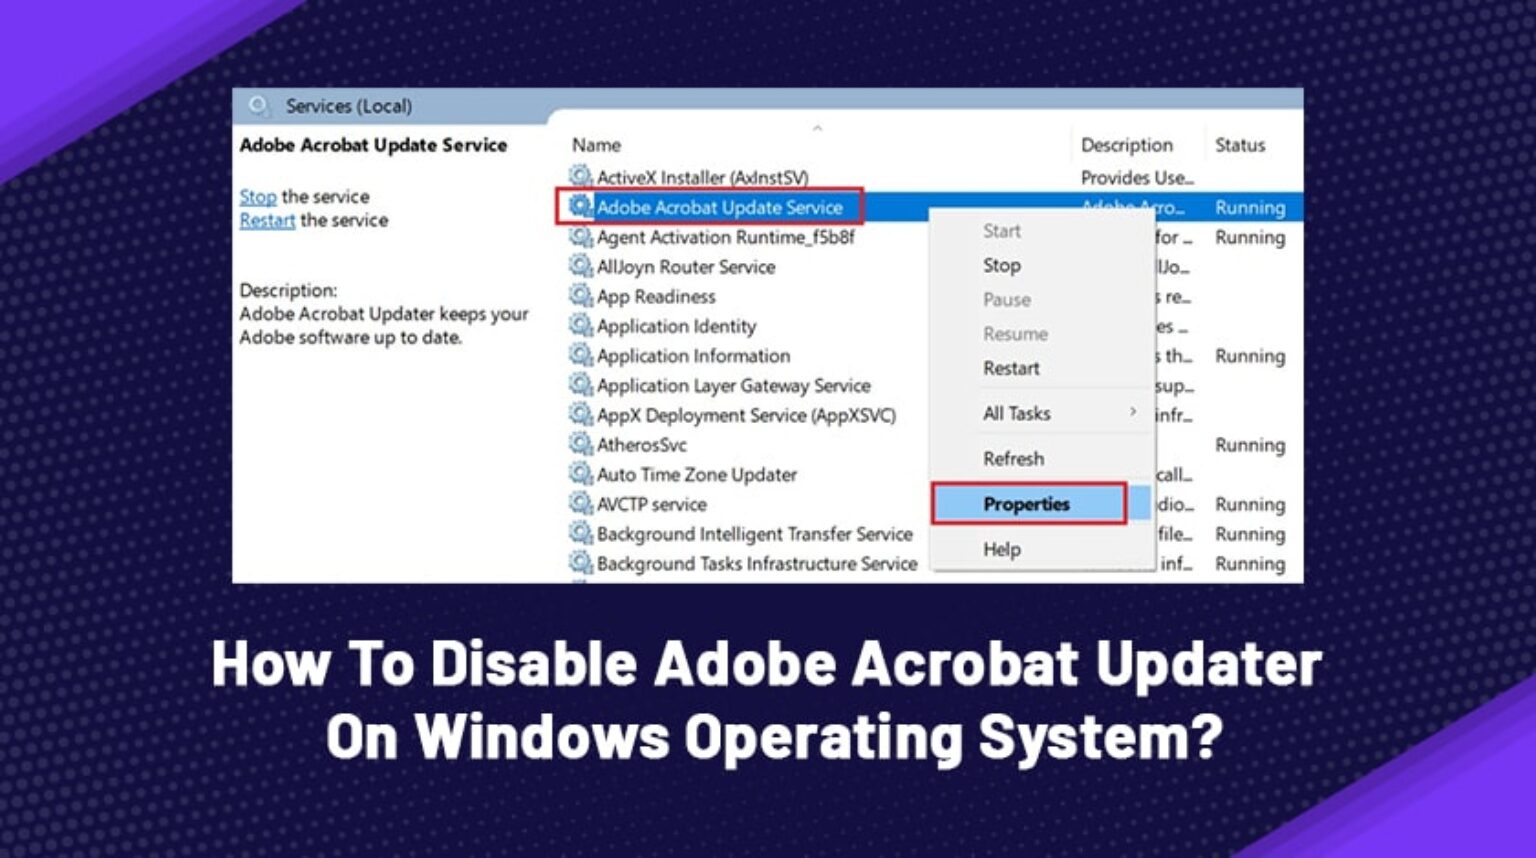 adobe acrobat pro update for mac